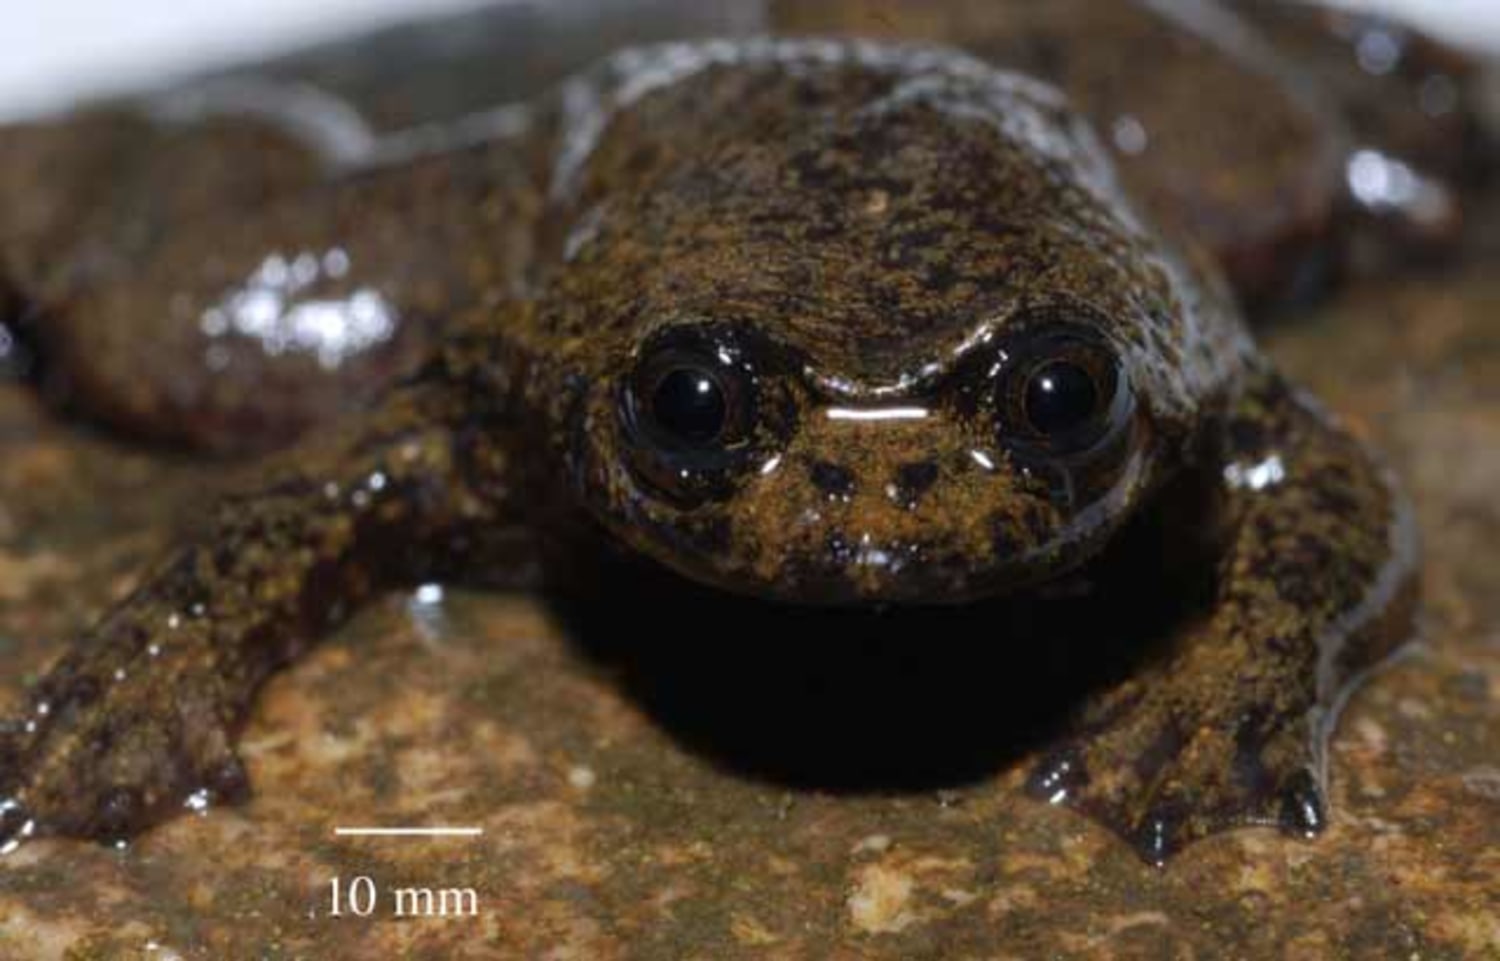 Scientists find bizarre lungless frog